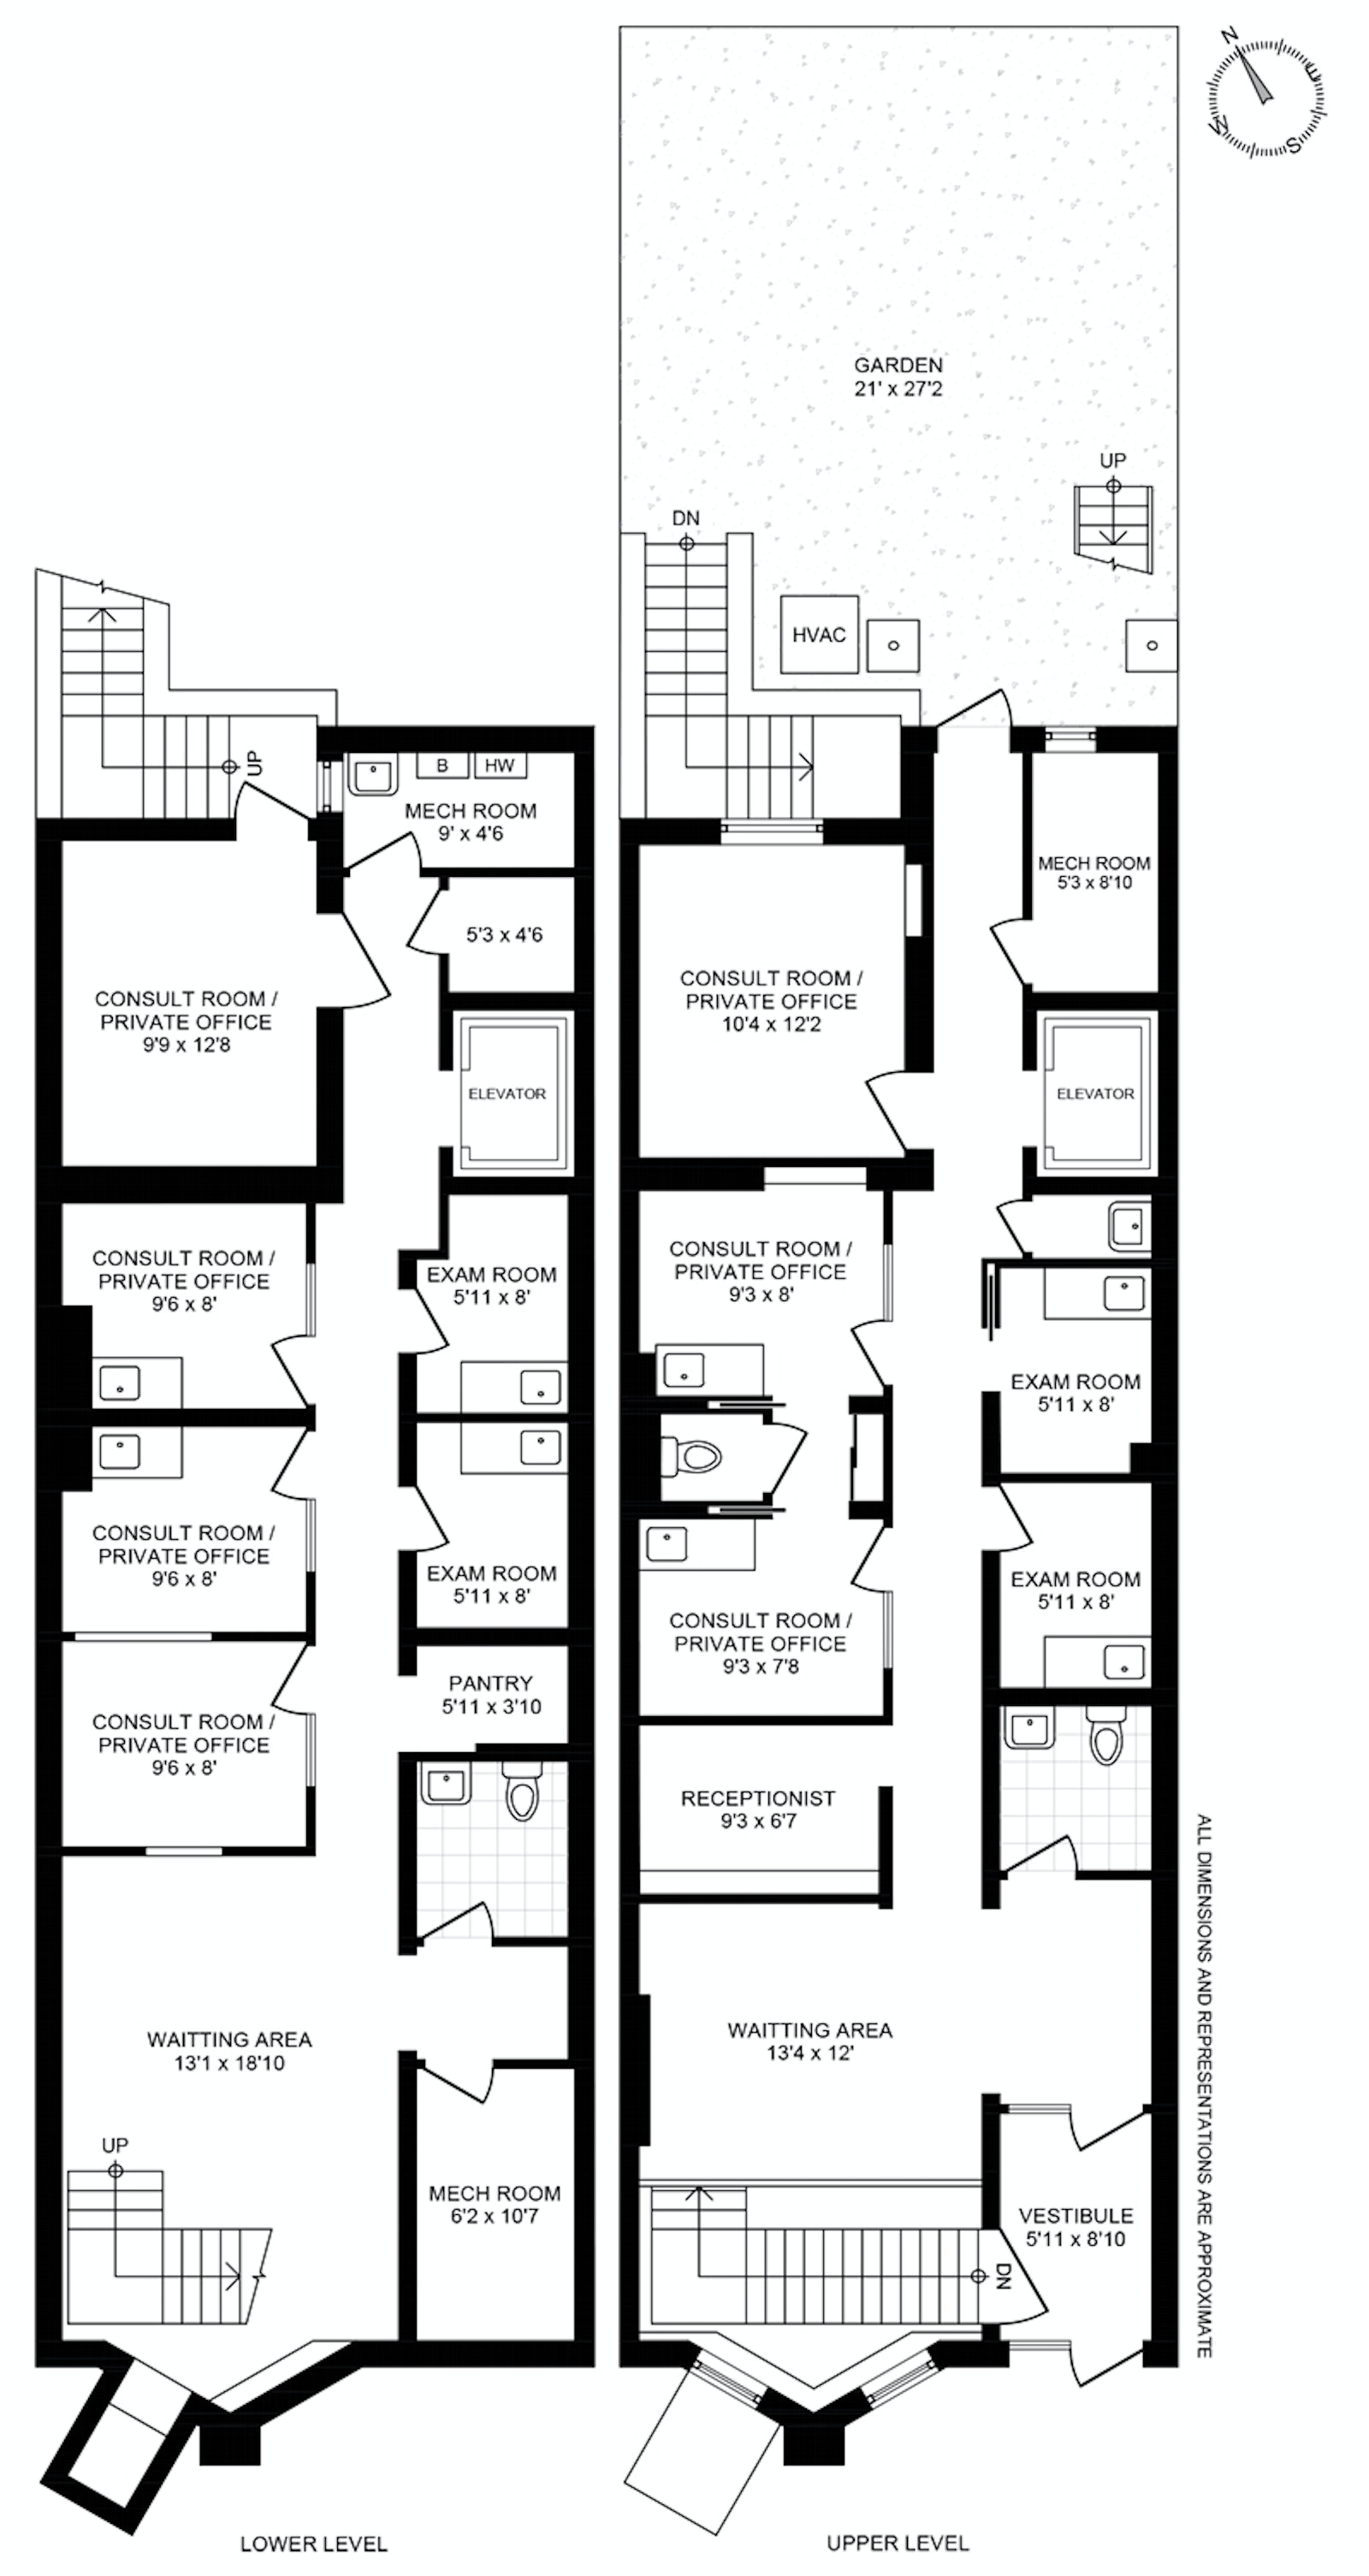 Floorplan for 207 Berkeley Pl, DUPLEX